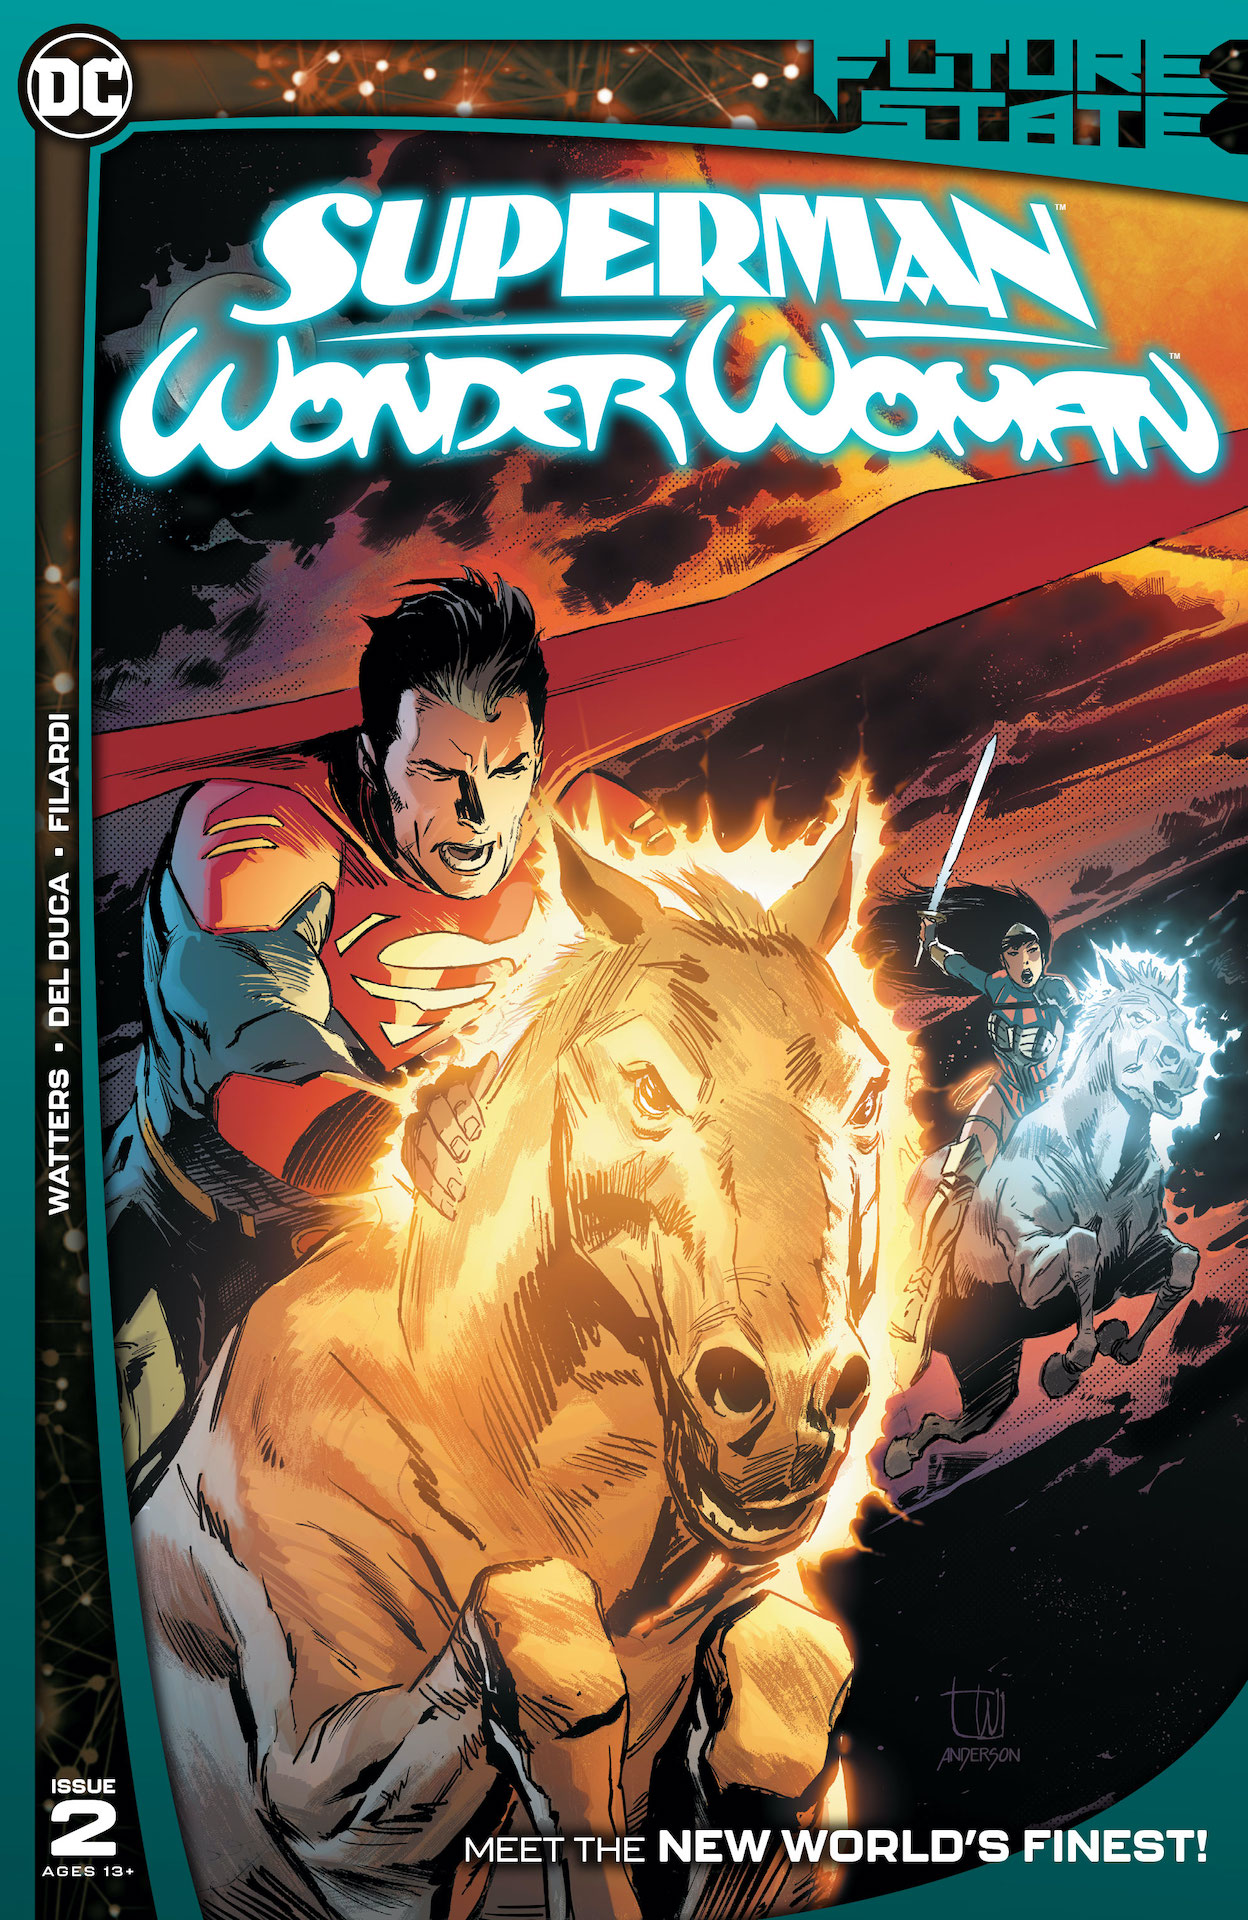 DC Preview: Future State #2: Superman/Wonder Woman